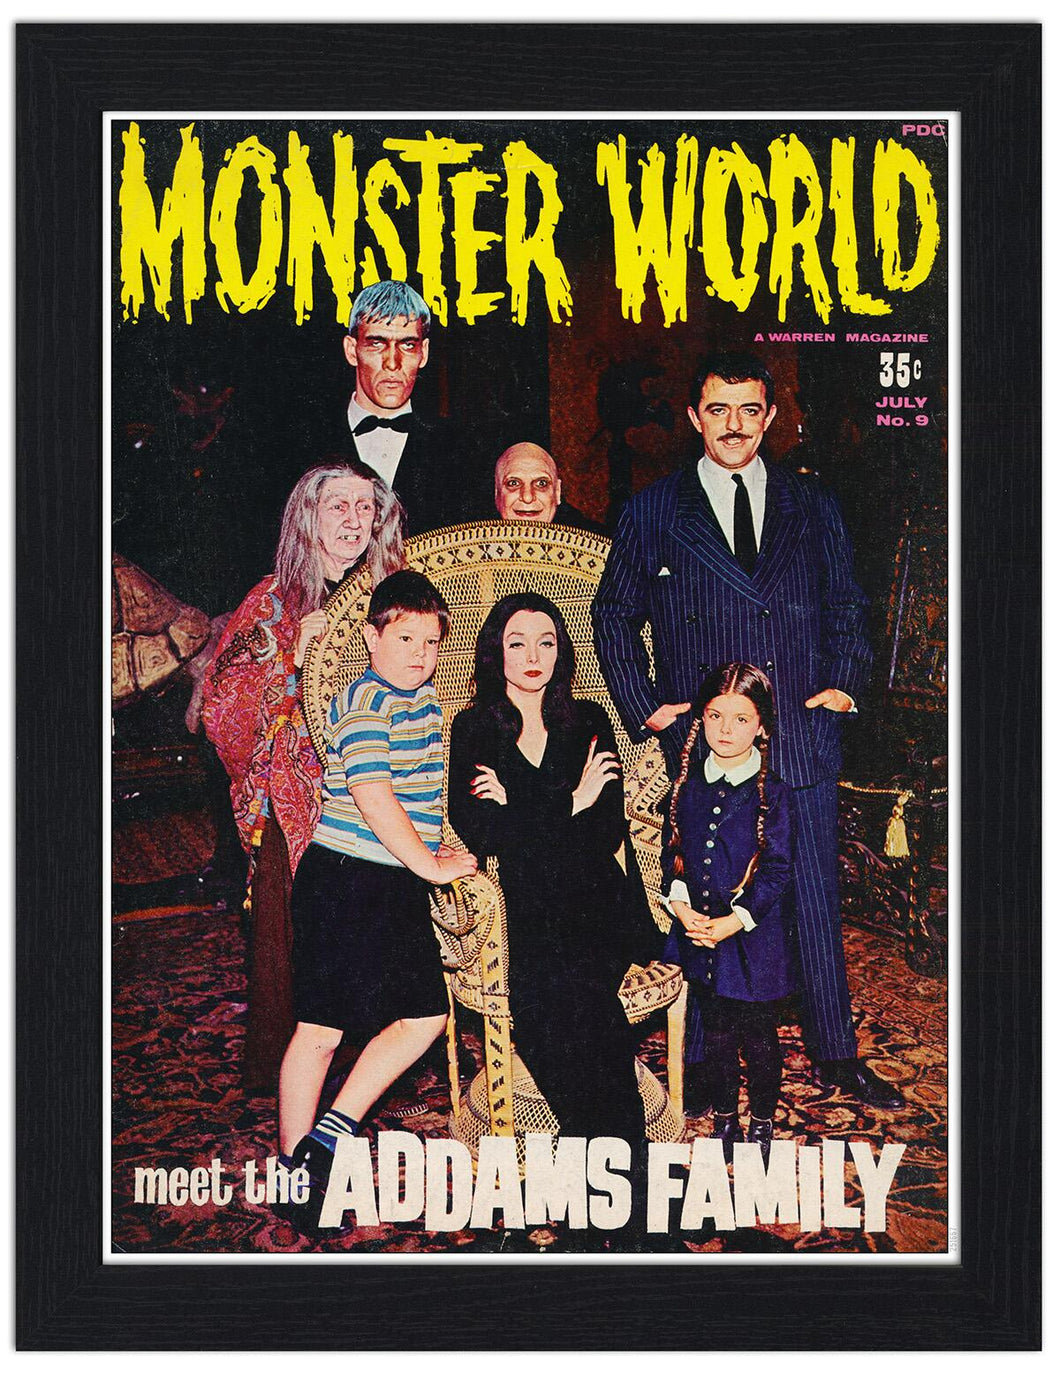 Monster World Magazine Cover The Addams Family 30x40 Unframed Art Print